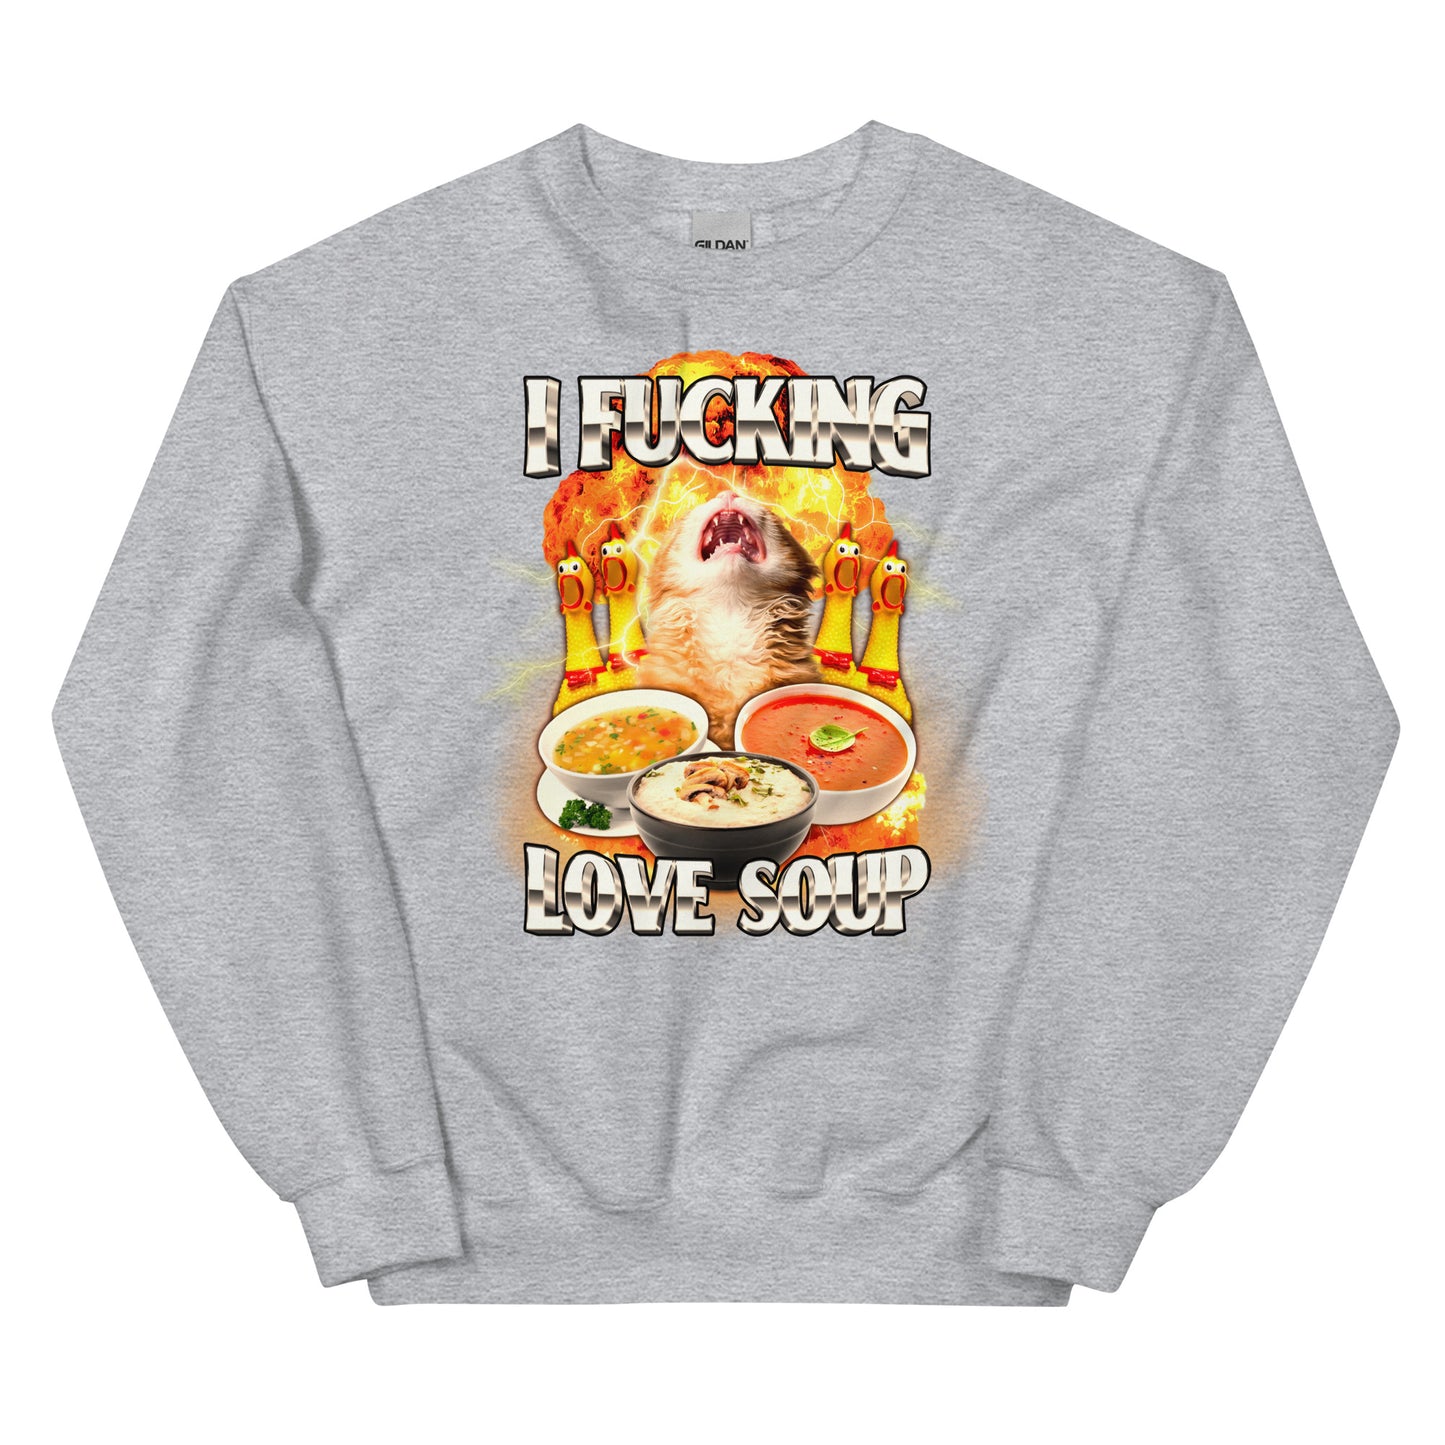 I Fucking Love Soup Unisex Sweatshirt